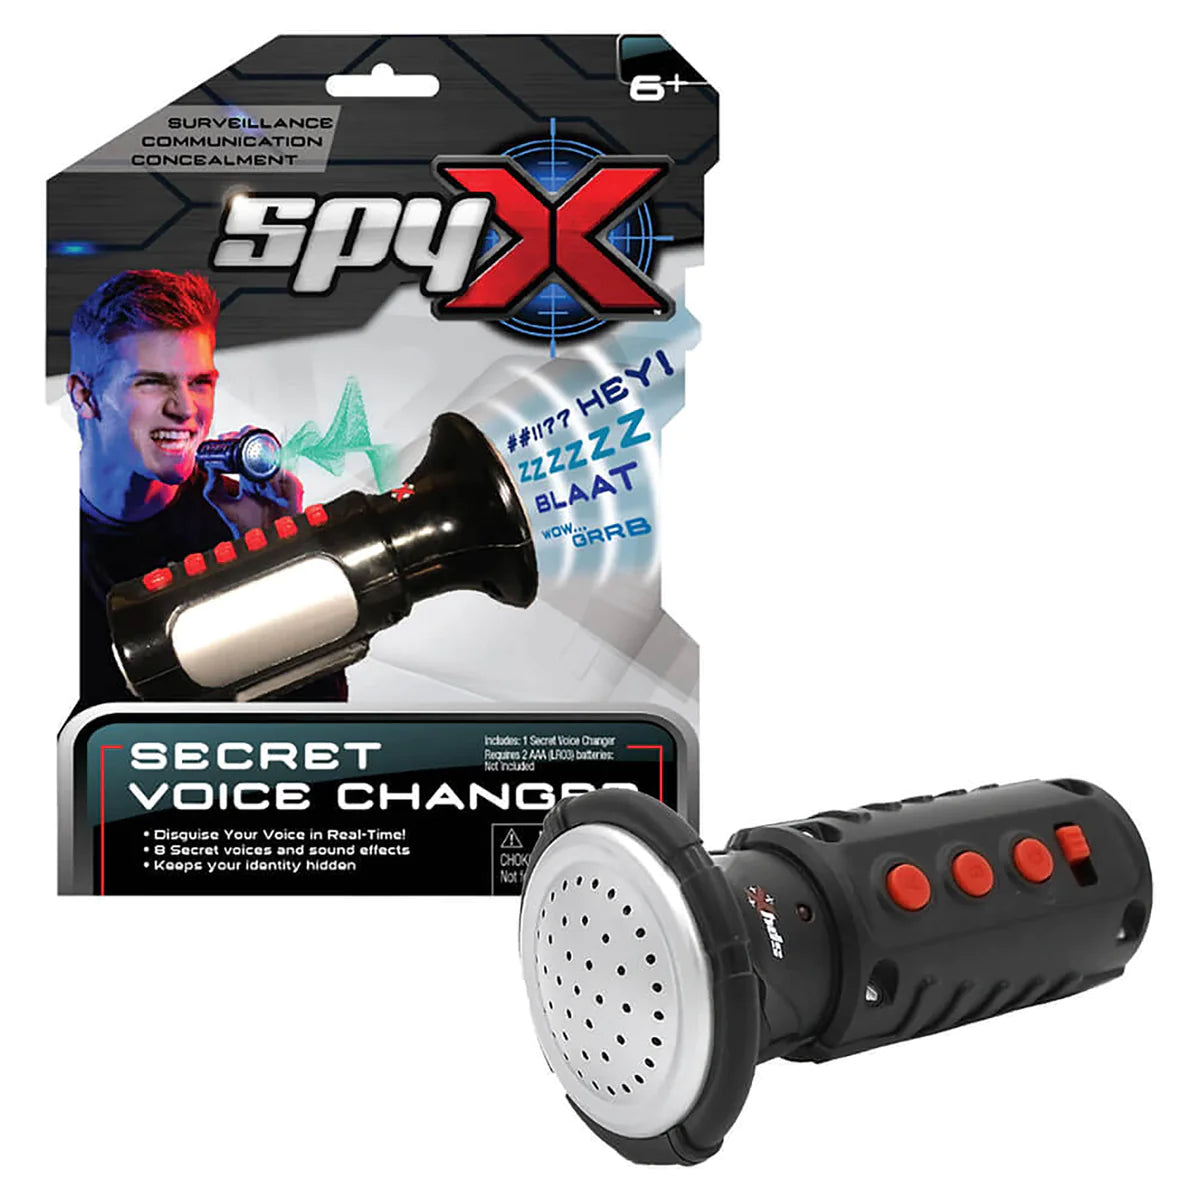 Spy X Secret Voice Changer req 2 x AAA batteries